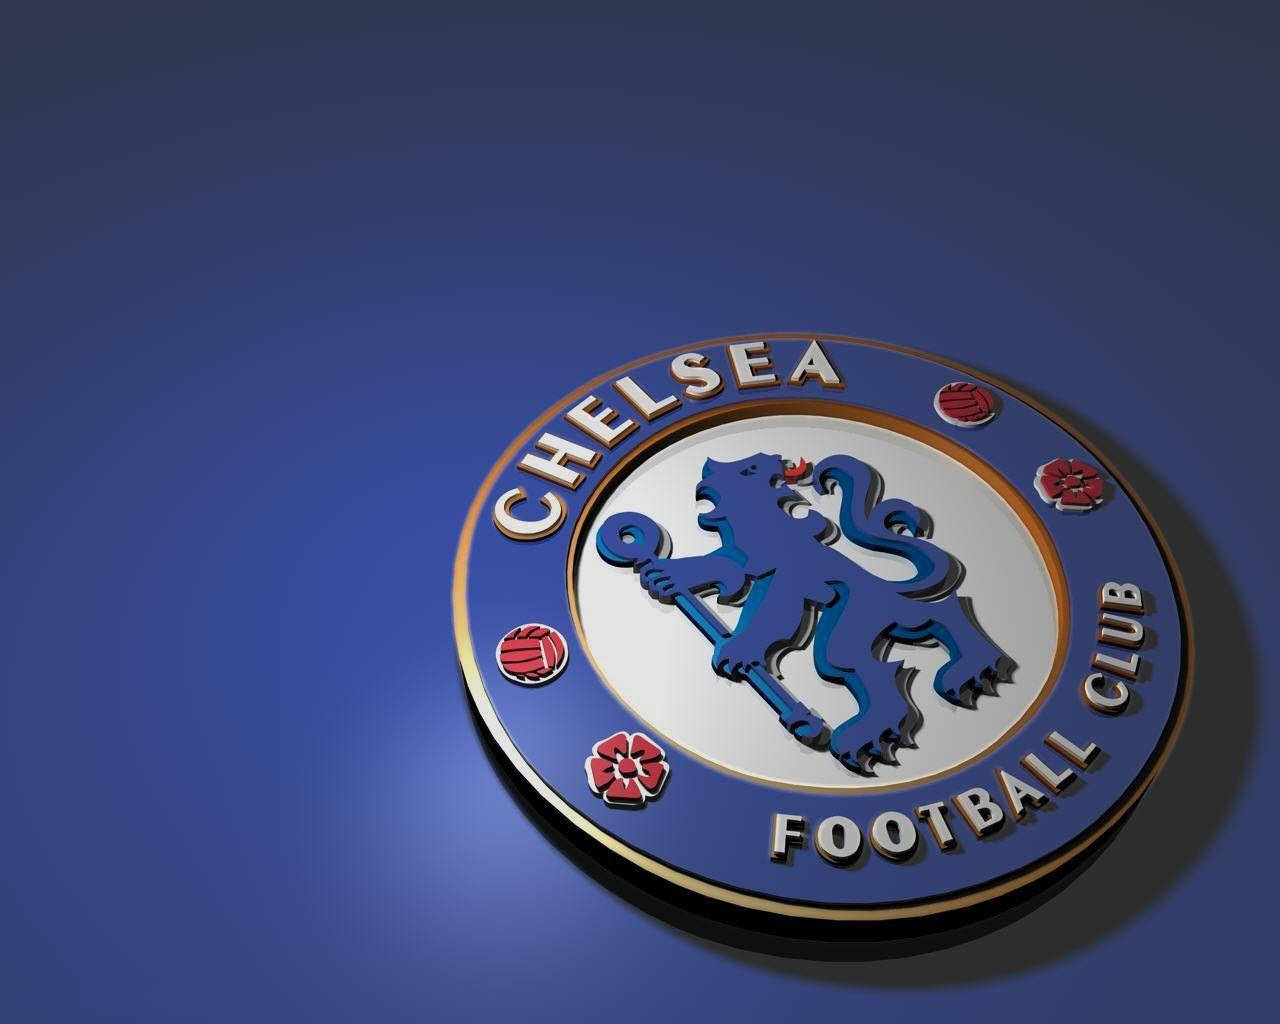 Chelsea Fc 3d Rendered Badge Wallpaper